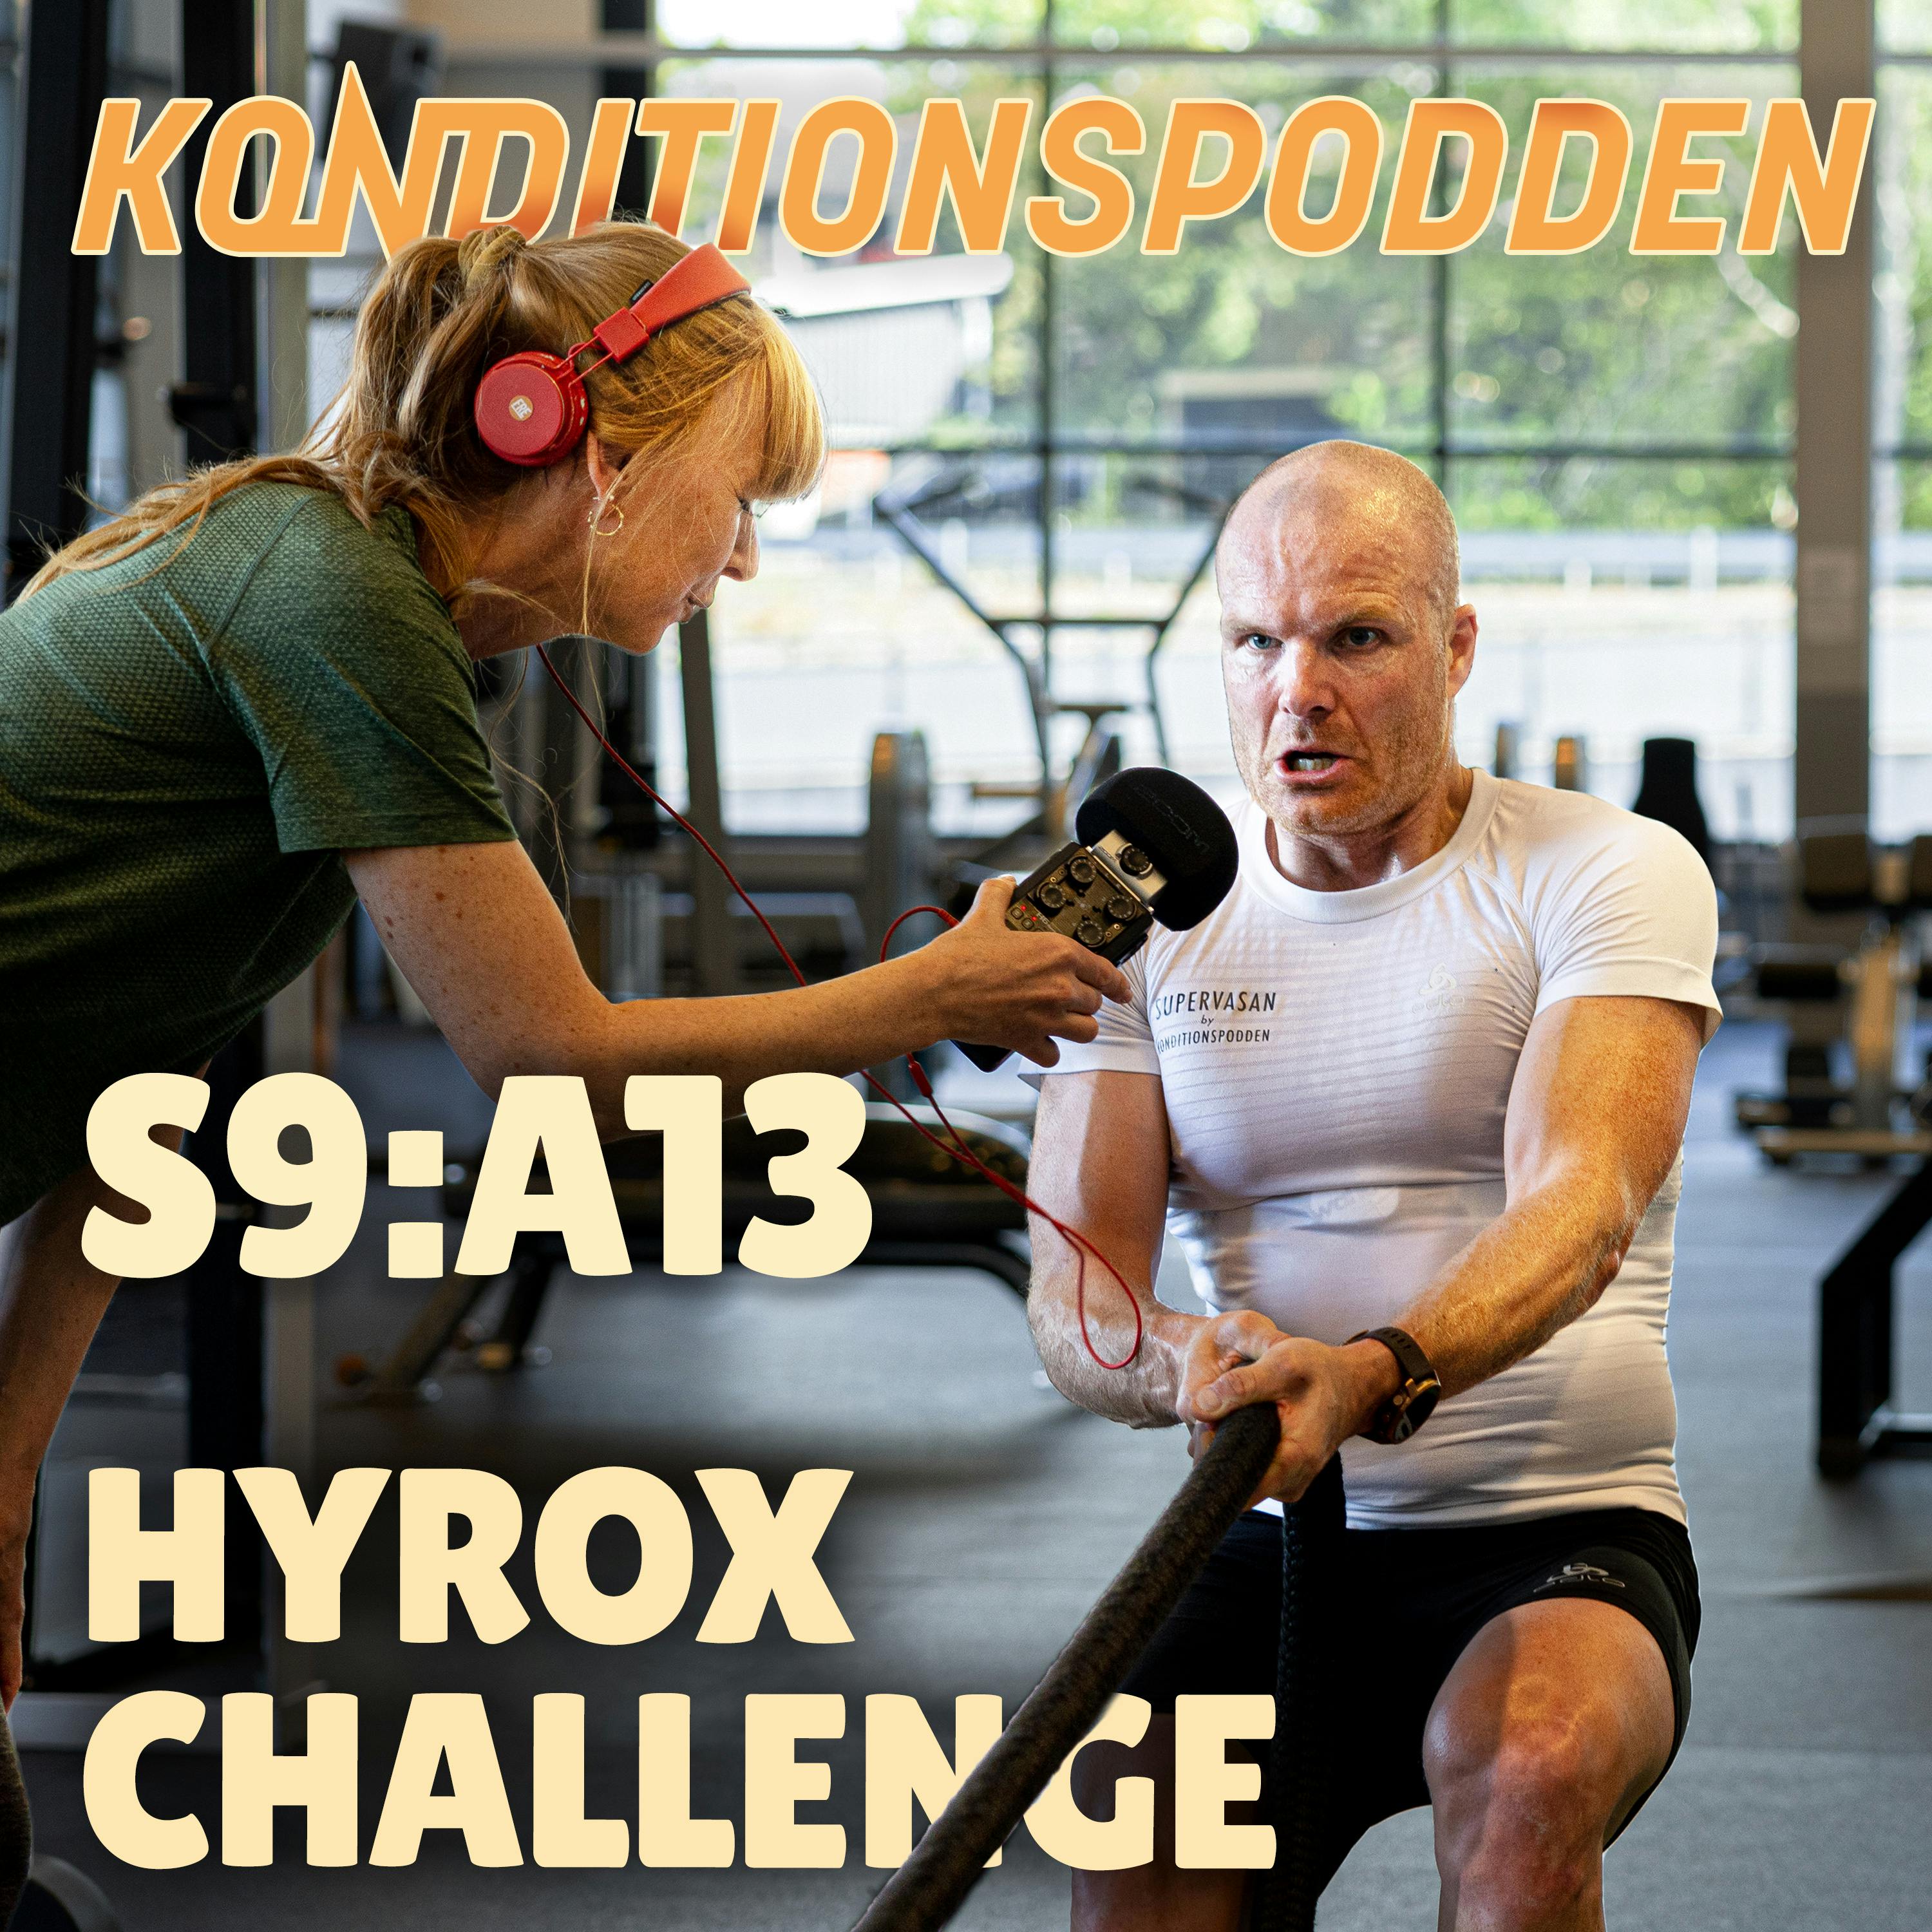 S10A13 HYROX CHALLENGE